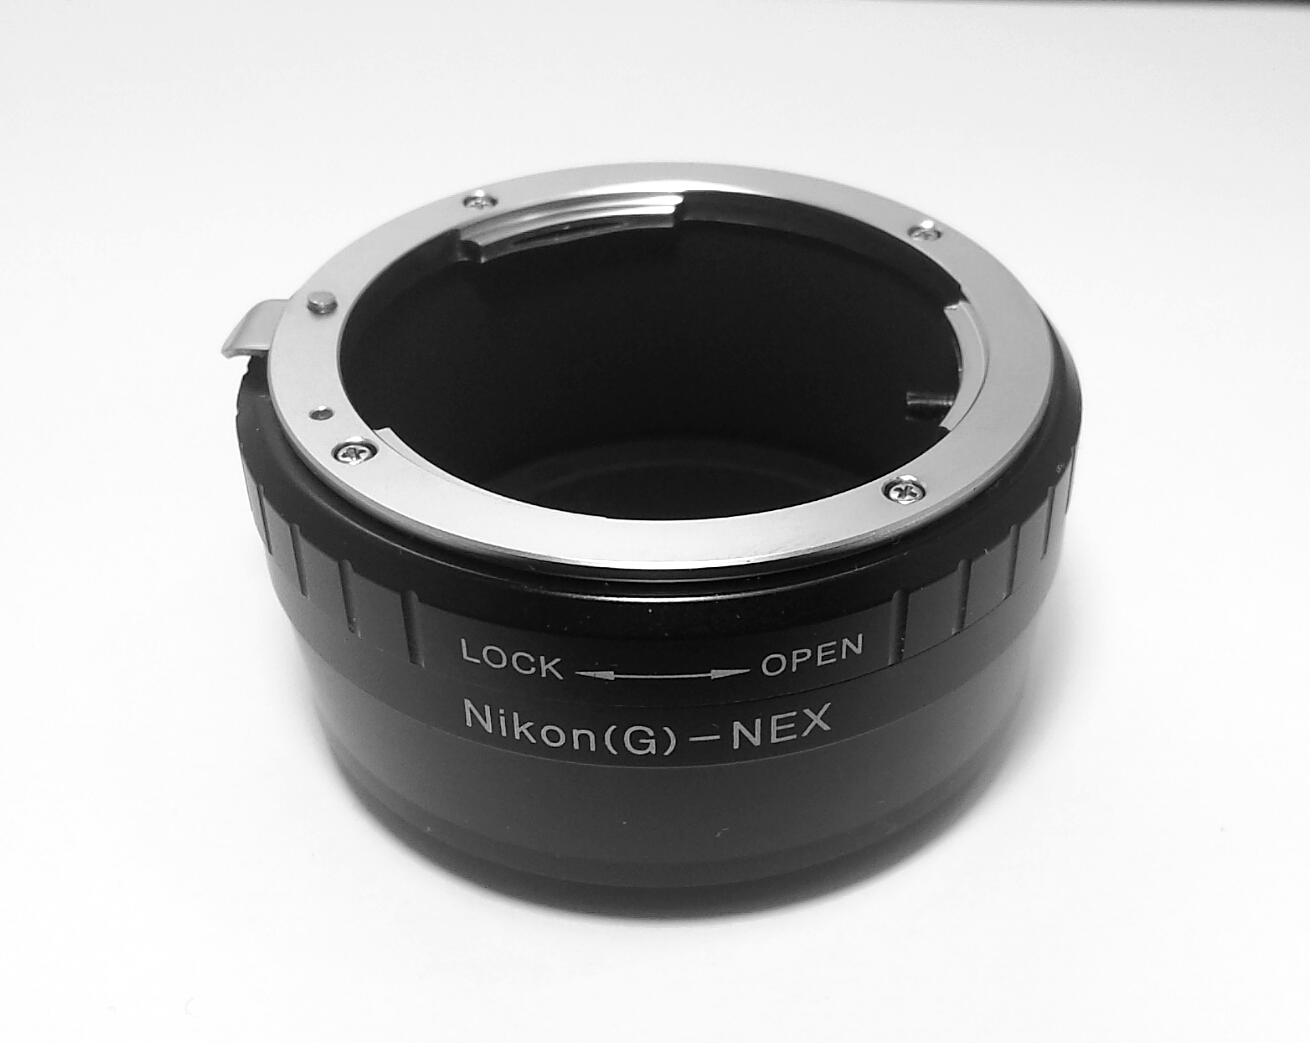 Nikon G Lens to Sony-NEX Body Camera Adapter